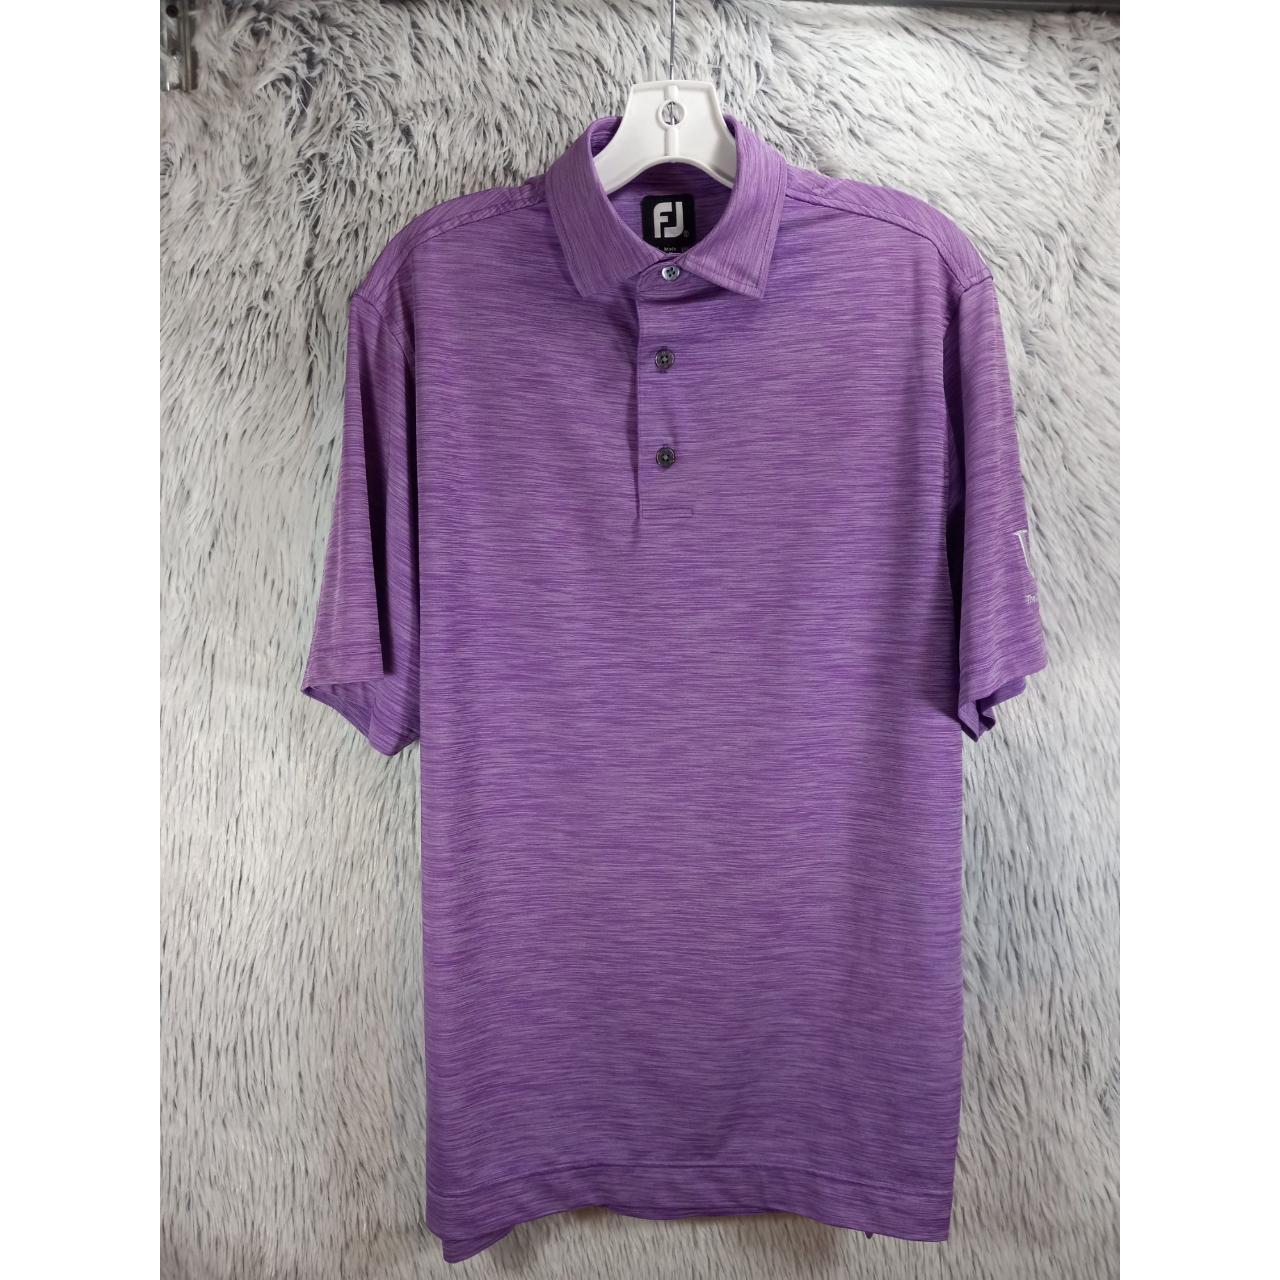 Foot Joy FJ Polo Shirt Mens Small Purple Embroidered... - Depop